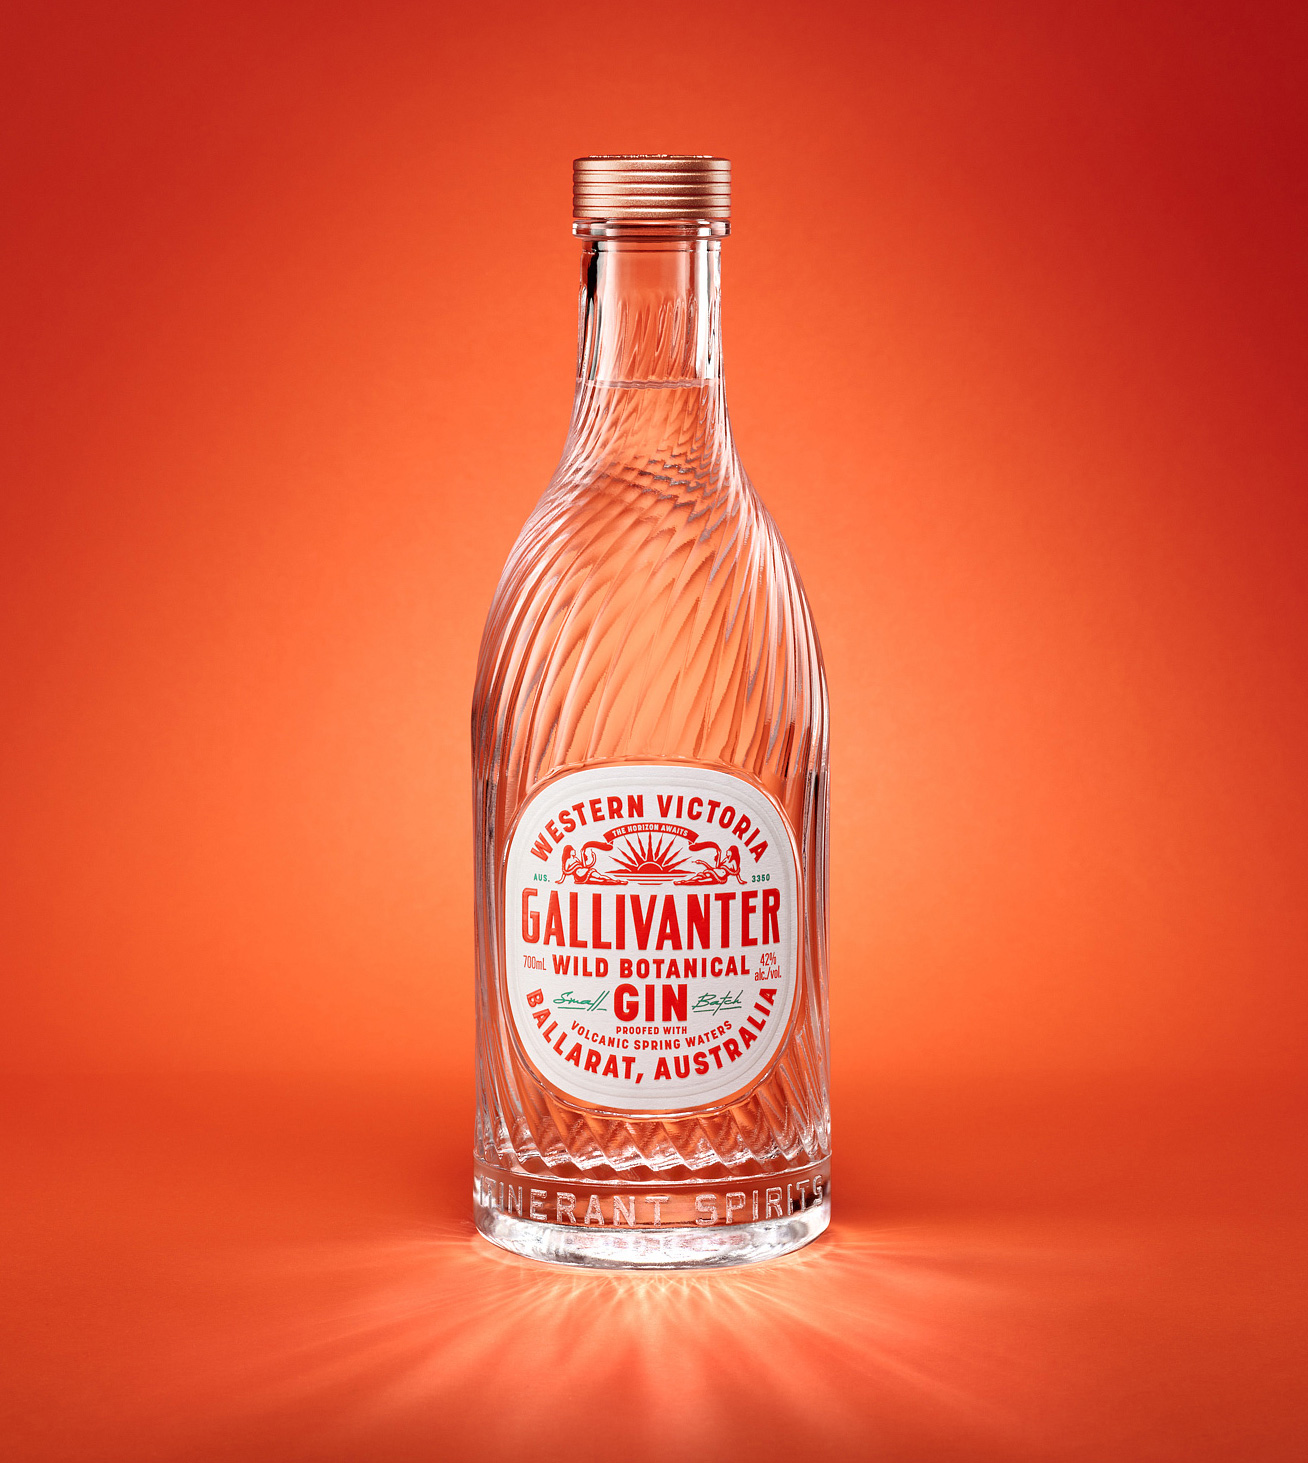 Branding and package design for Gallivanter Gin of Australia